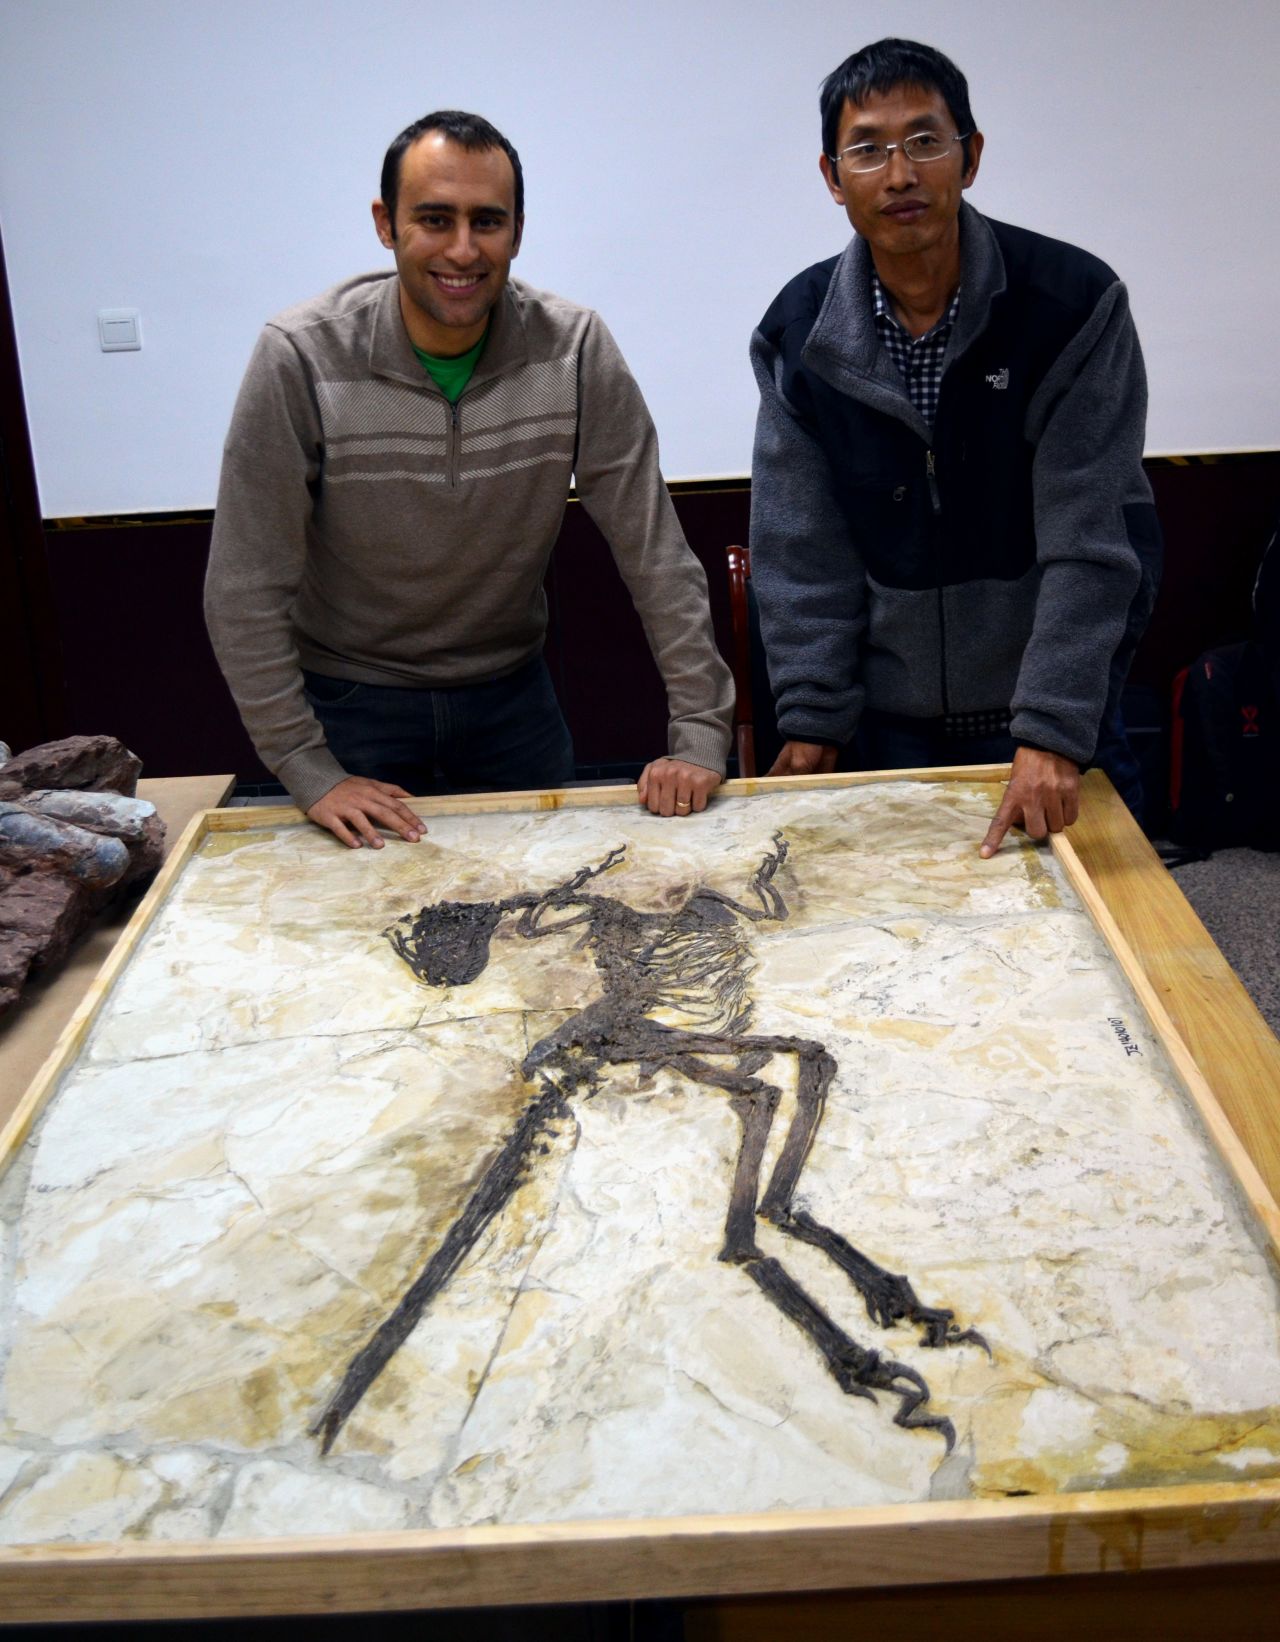 Steve Brusatte, left, and Lu Junchang post in front of the Zhenyuanlong skeleton